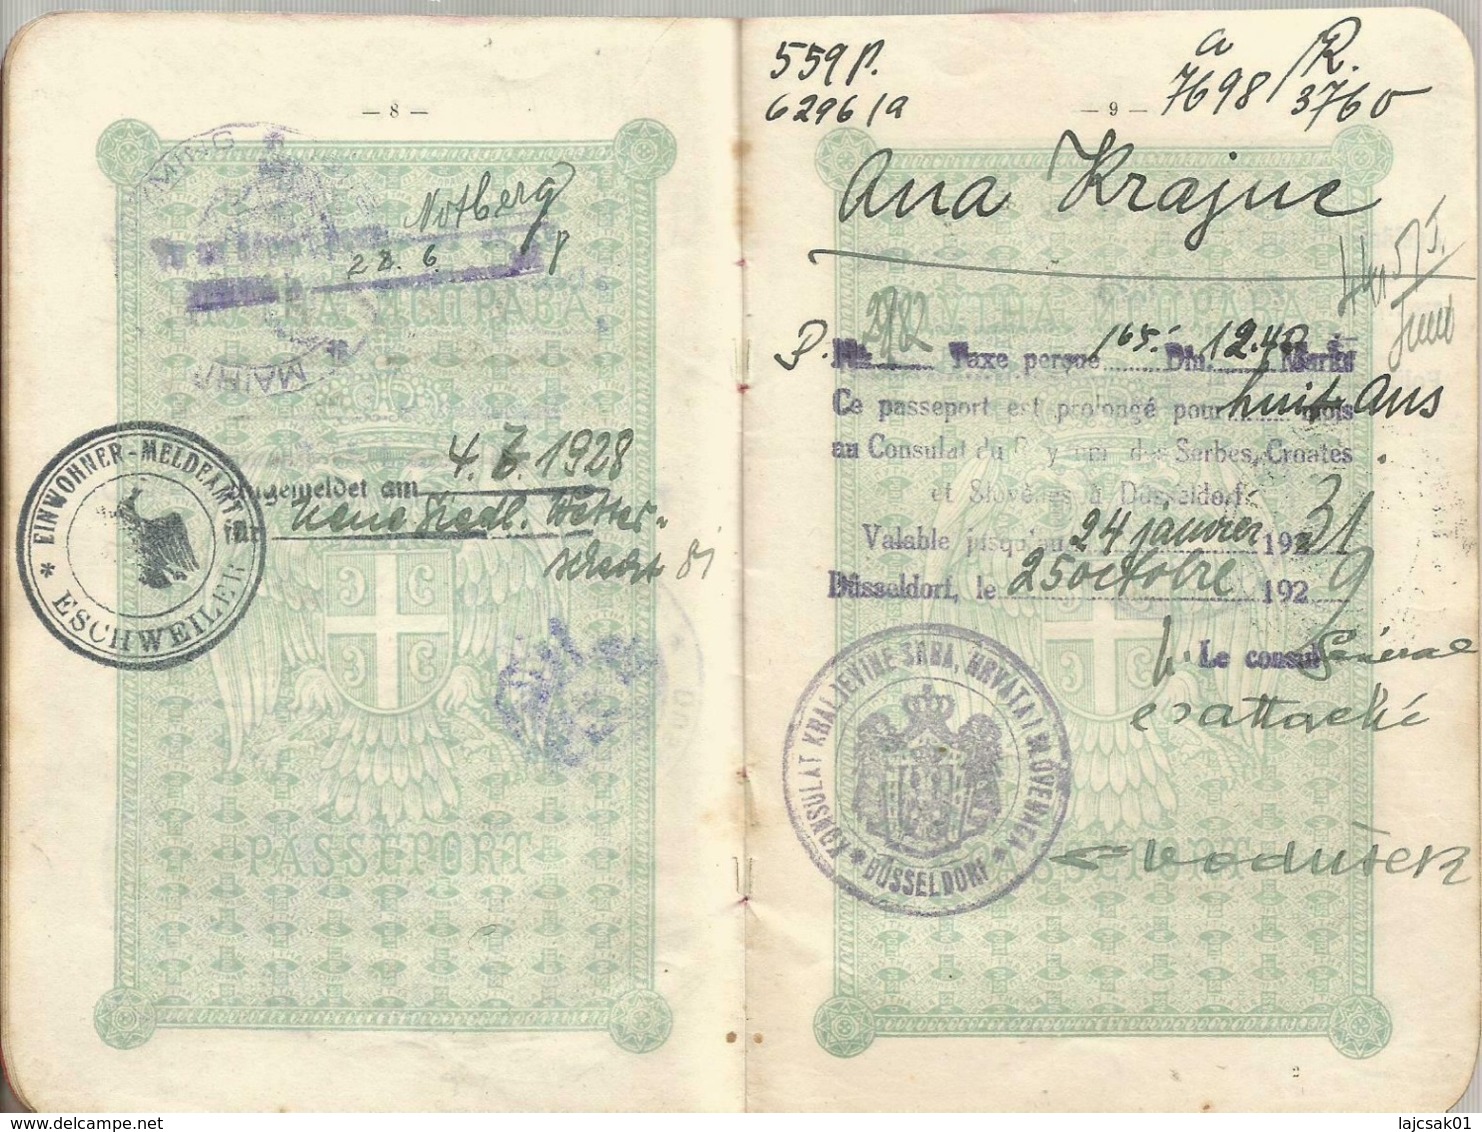 Kingdom of Serbs Croats and Slovenes 1922.  Passport pasaporte passeport passaporto passaporte